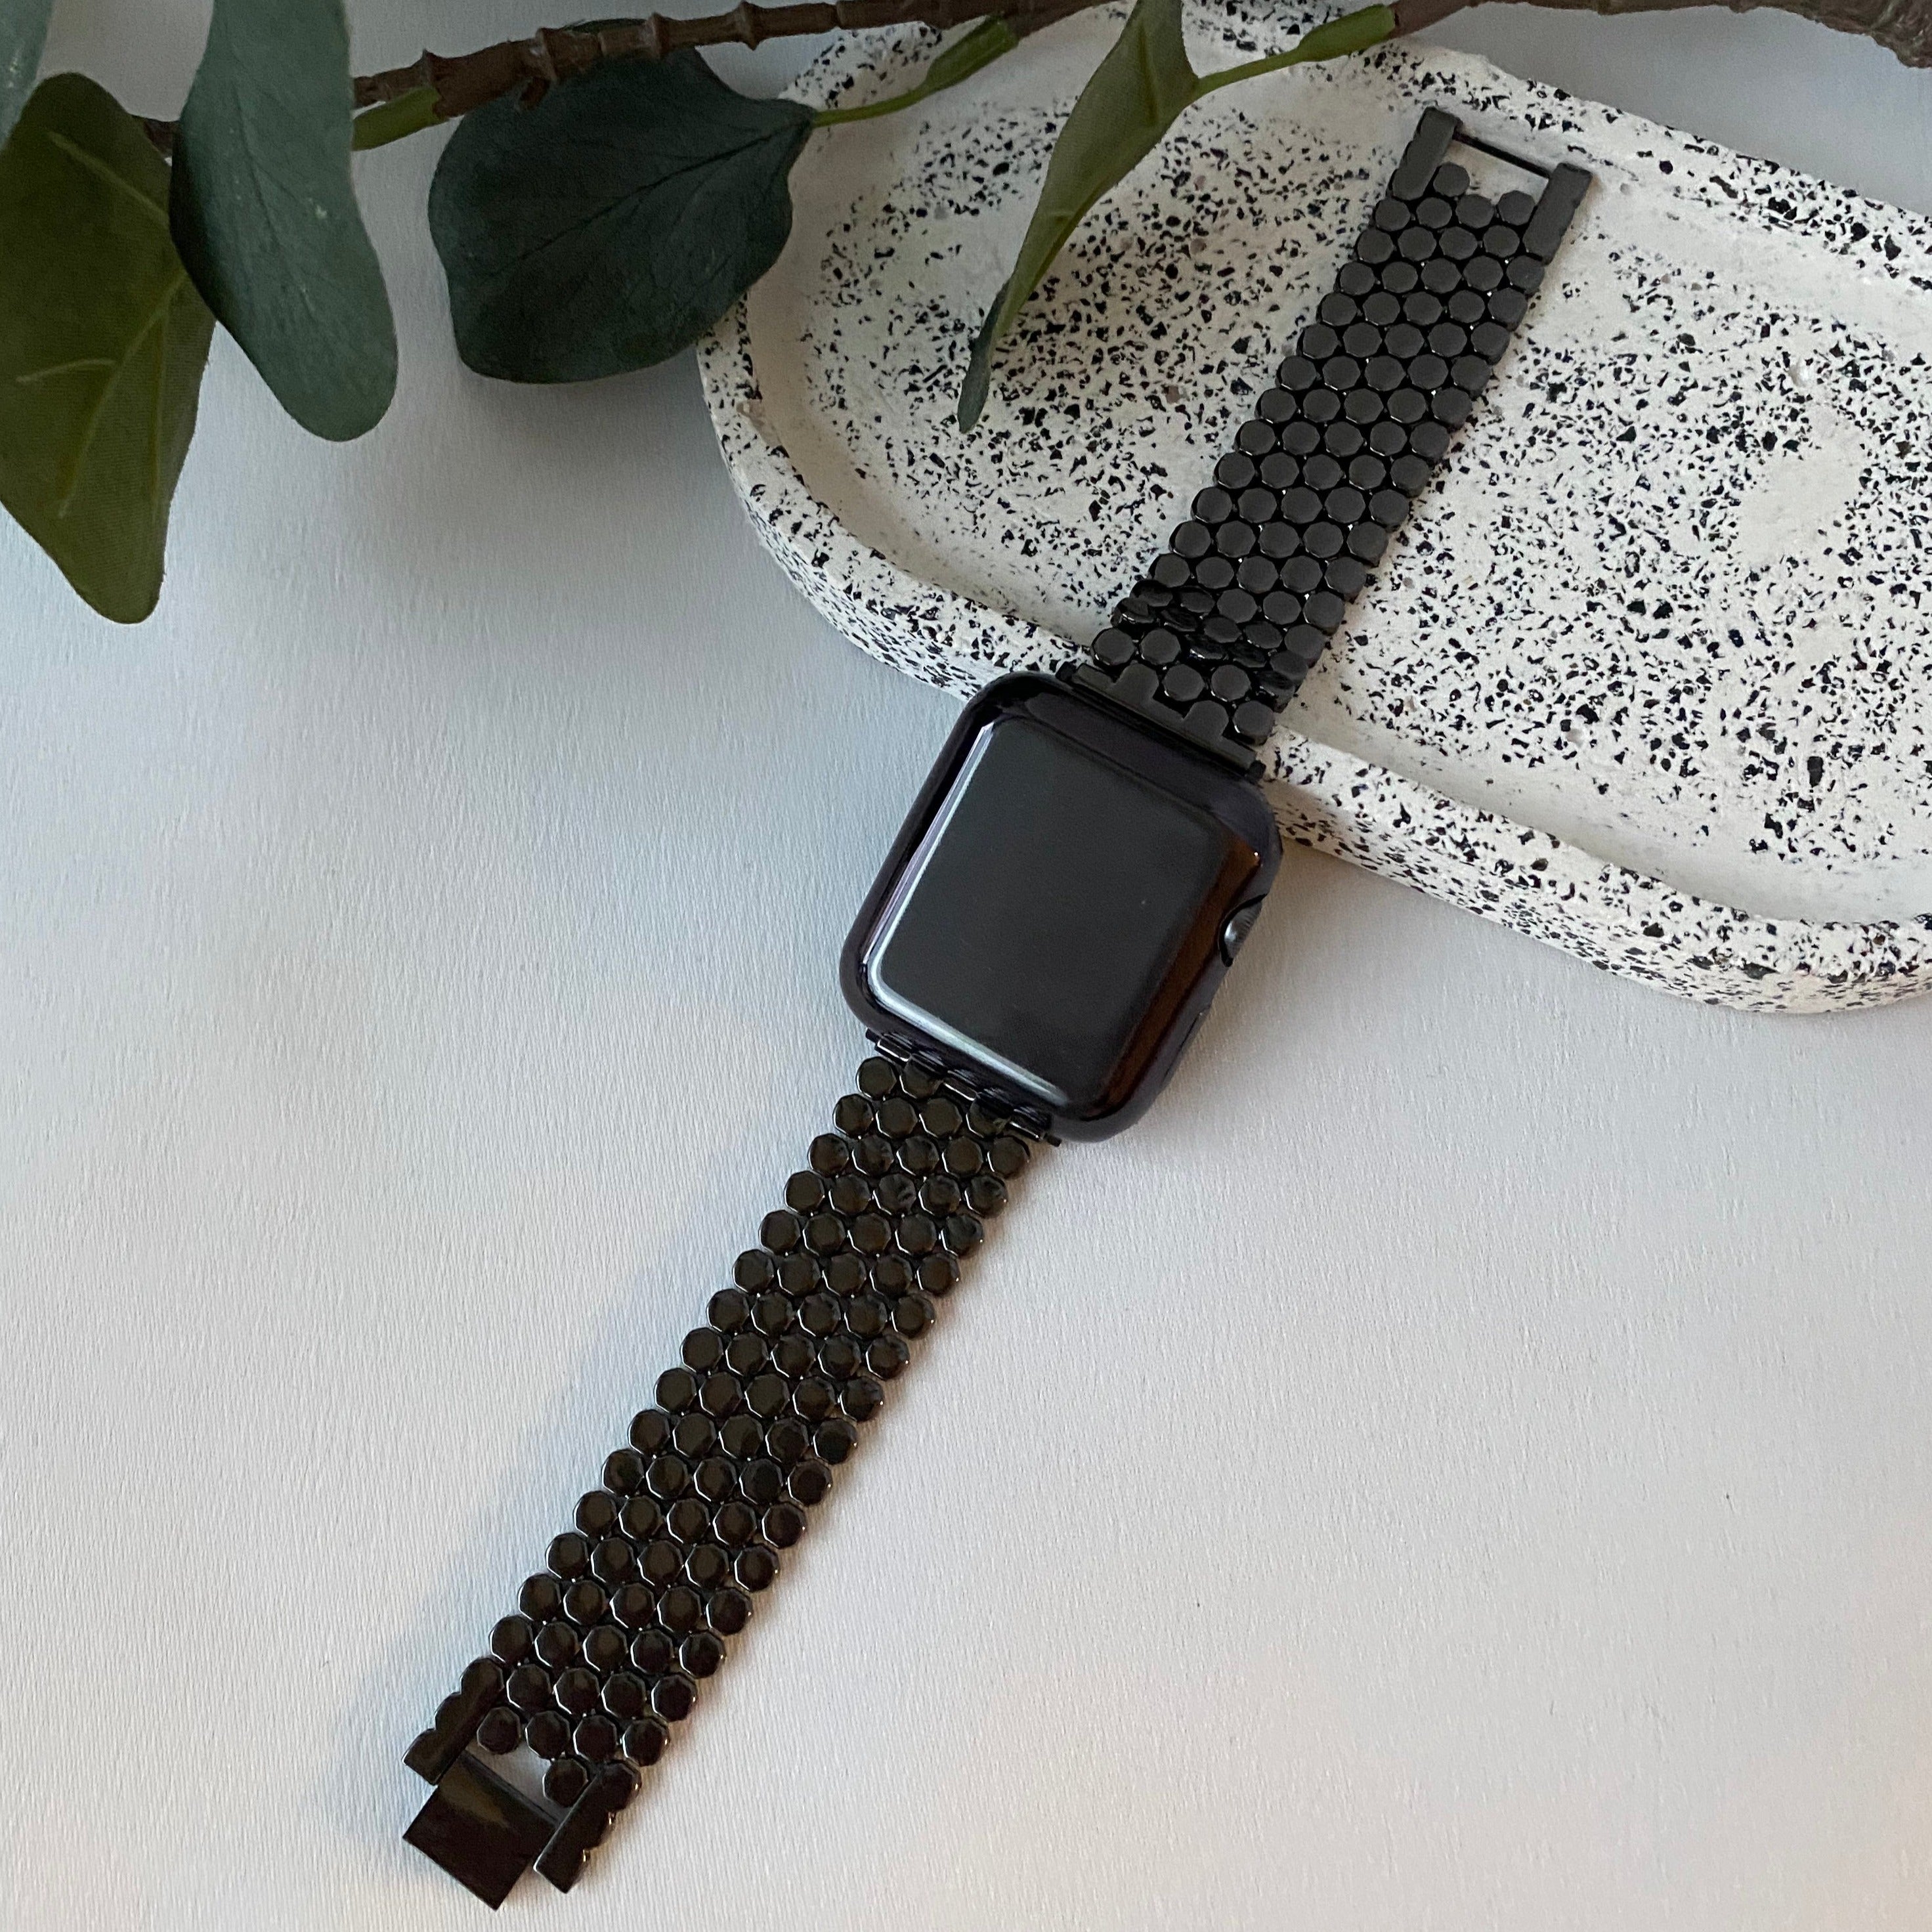 Designer Apple Watch Bands For Women - Watch Station